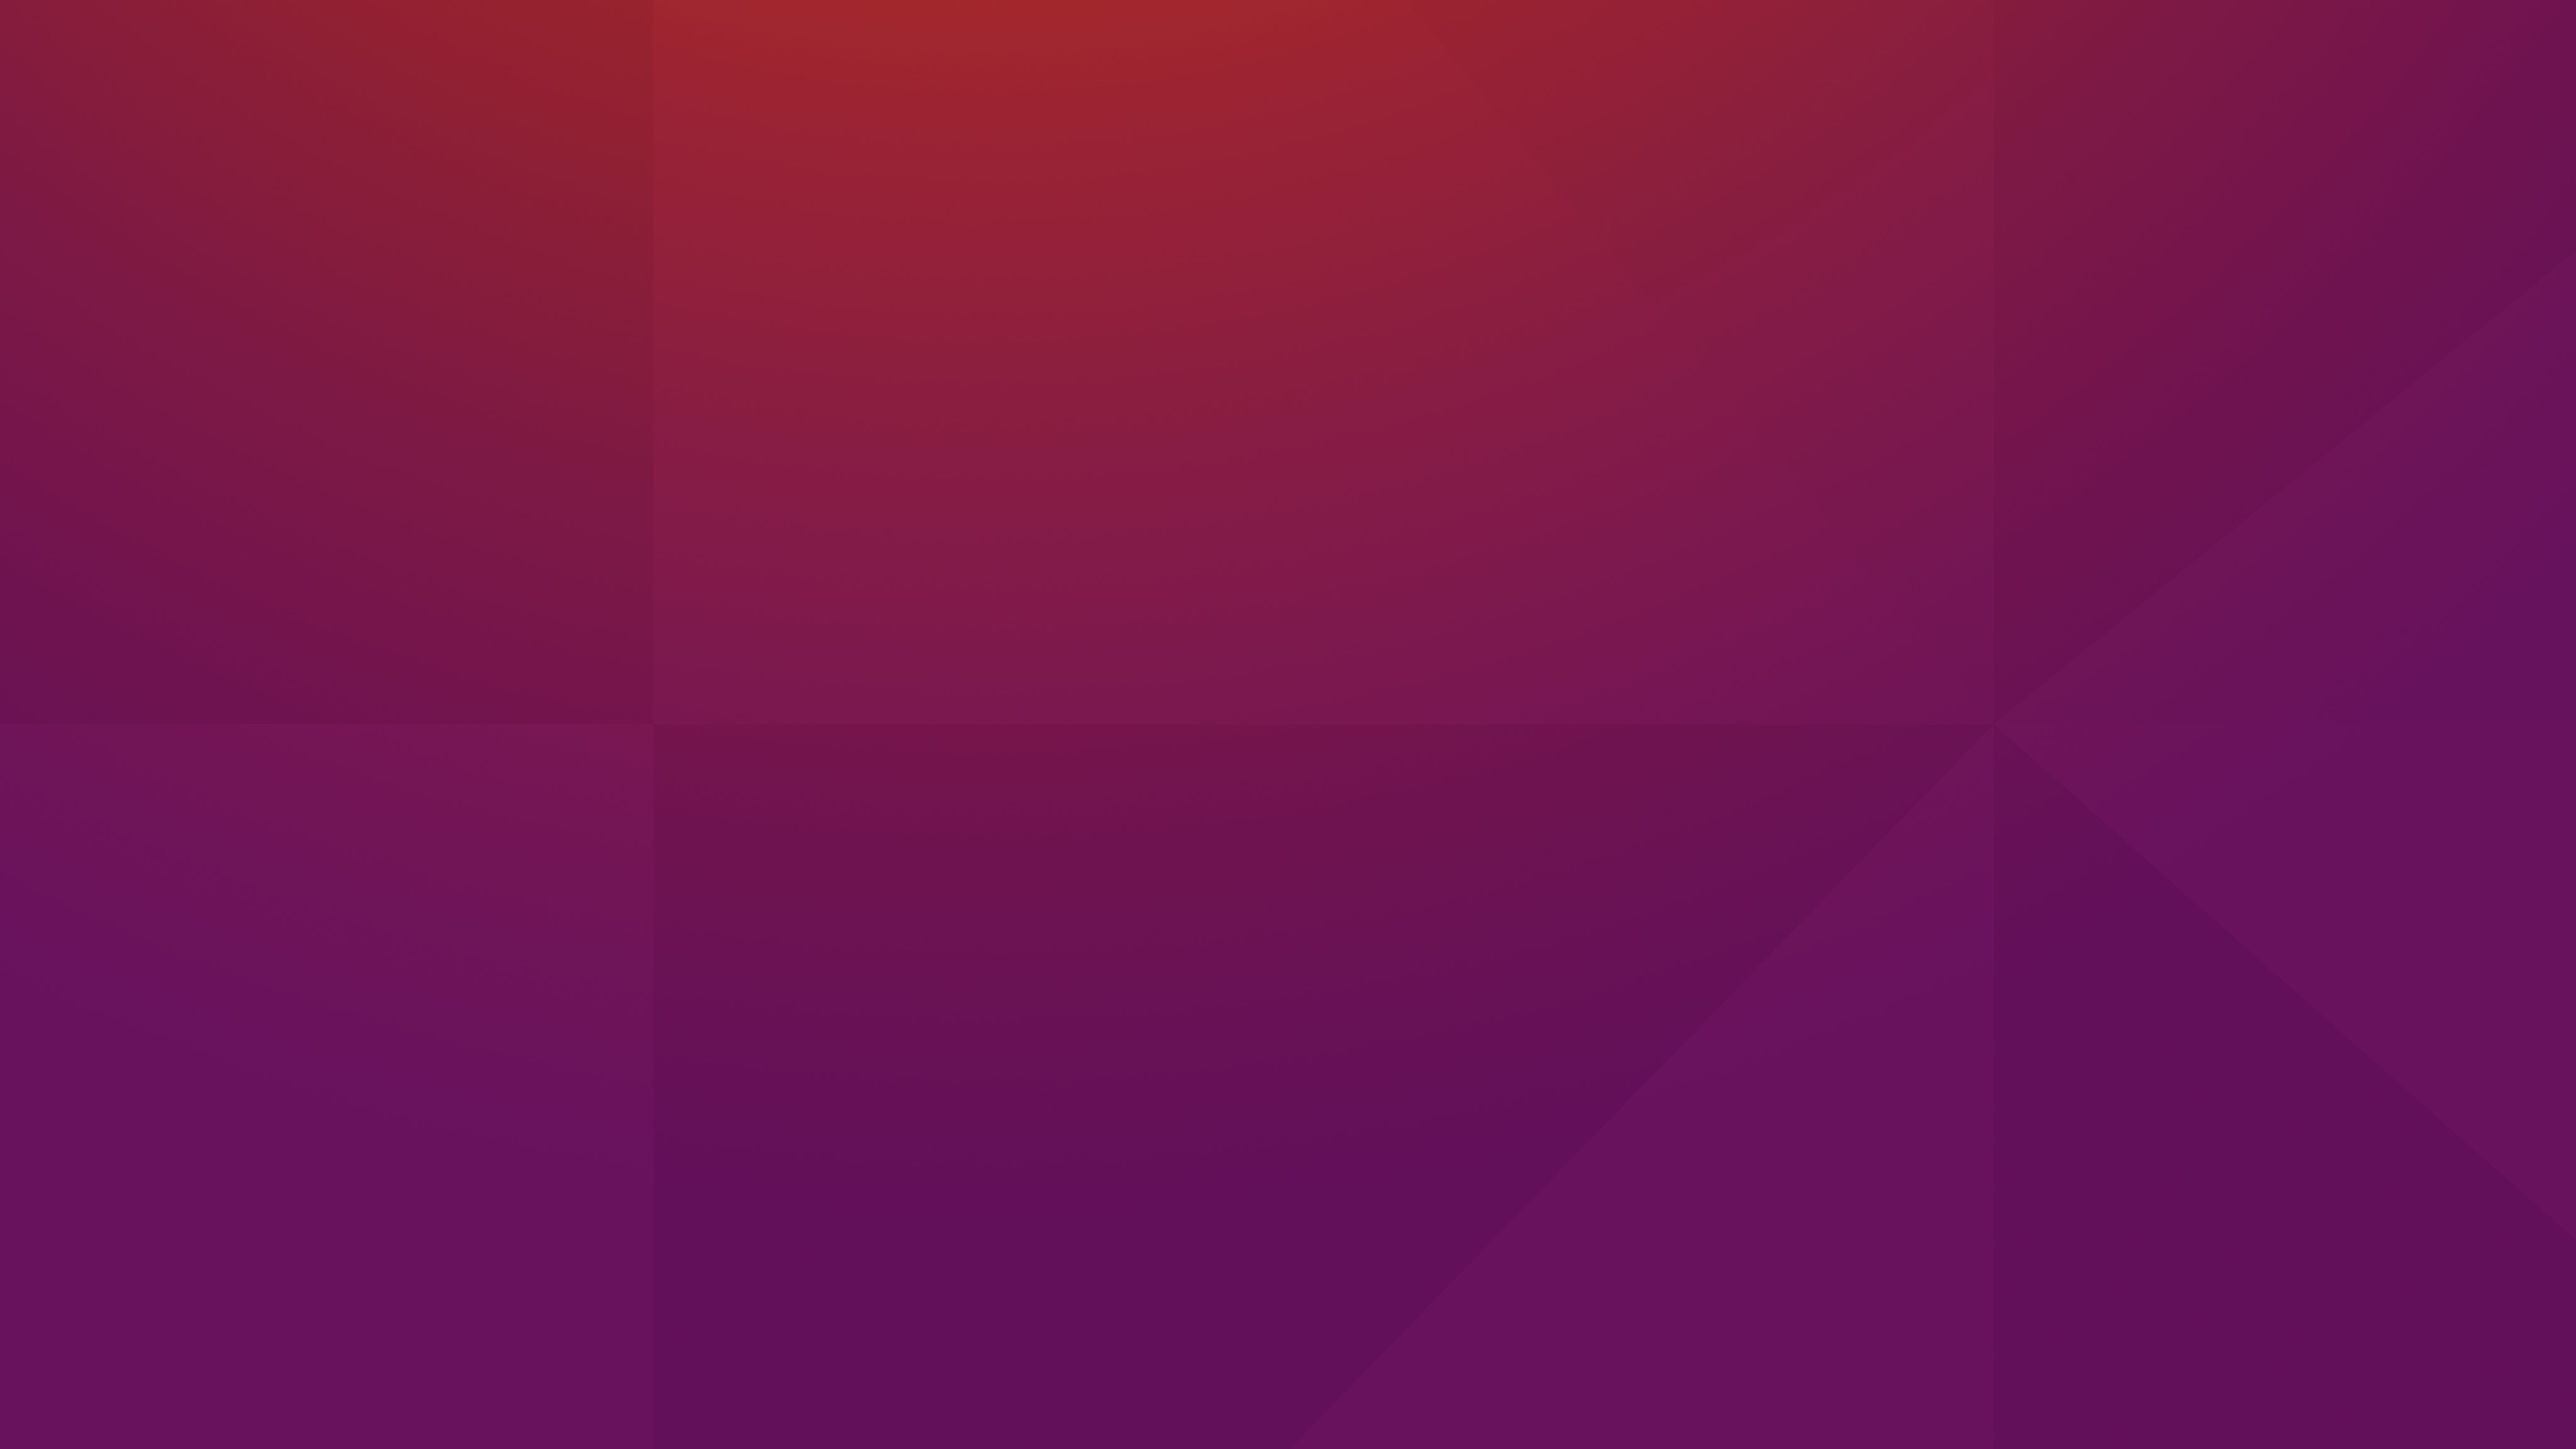 Desktop Modding Ubuntu Wallpaper Pack